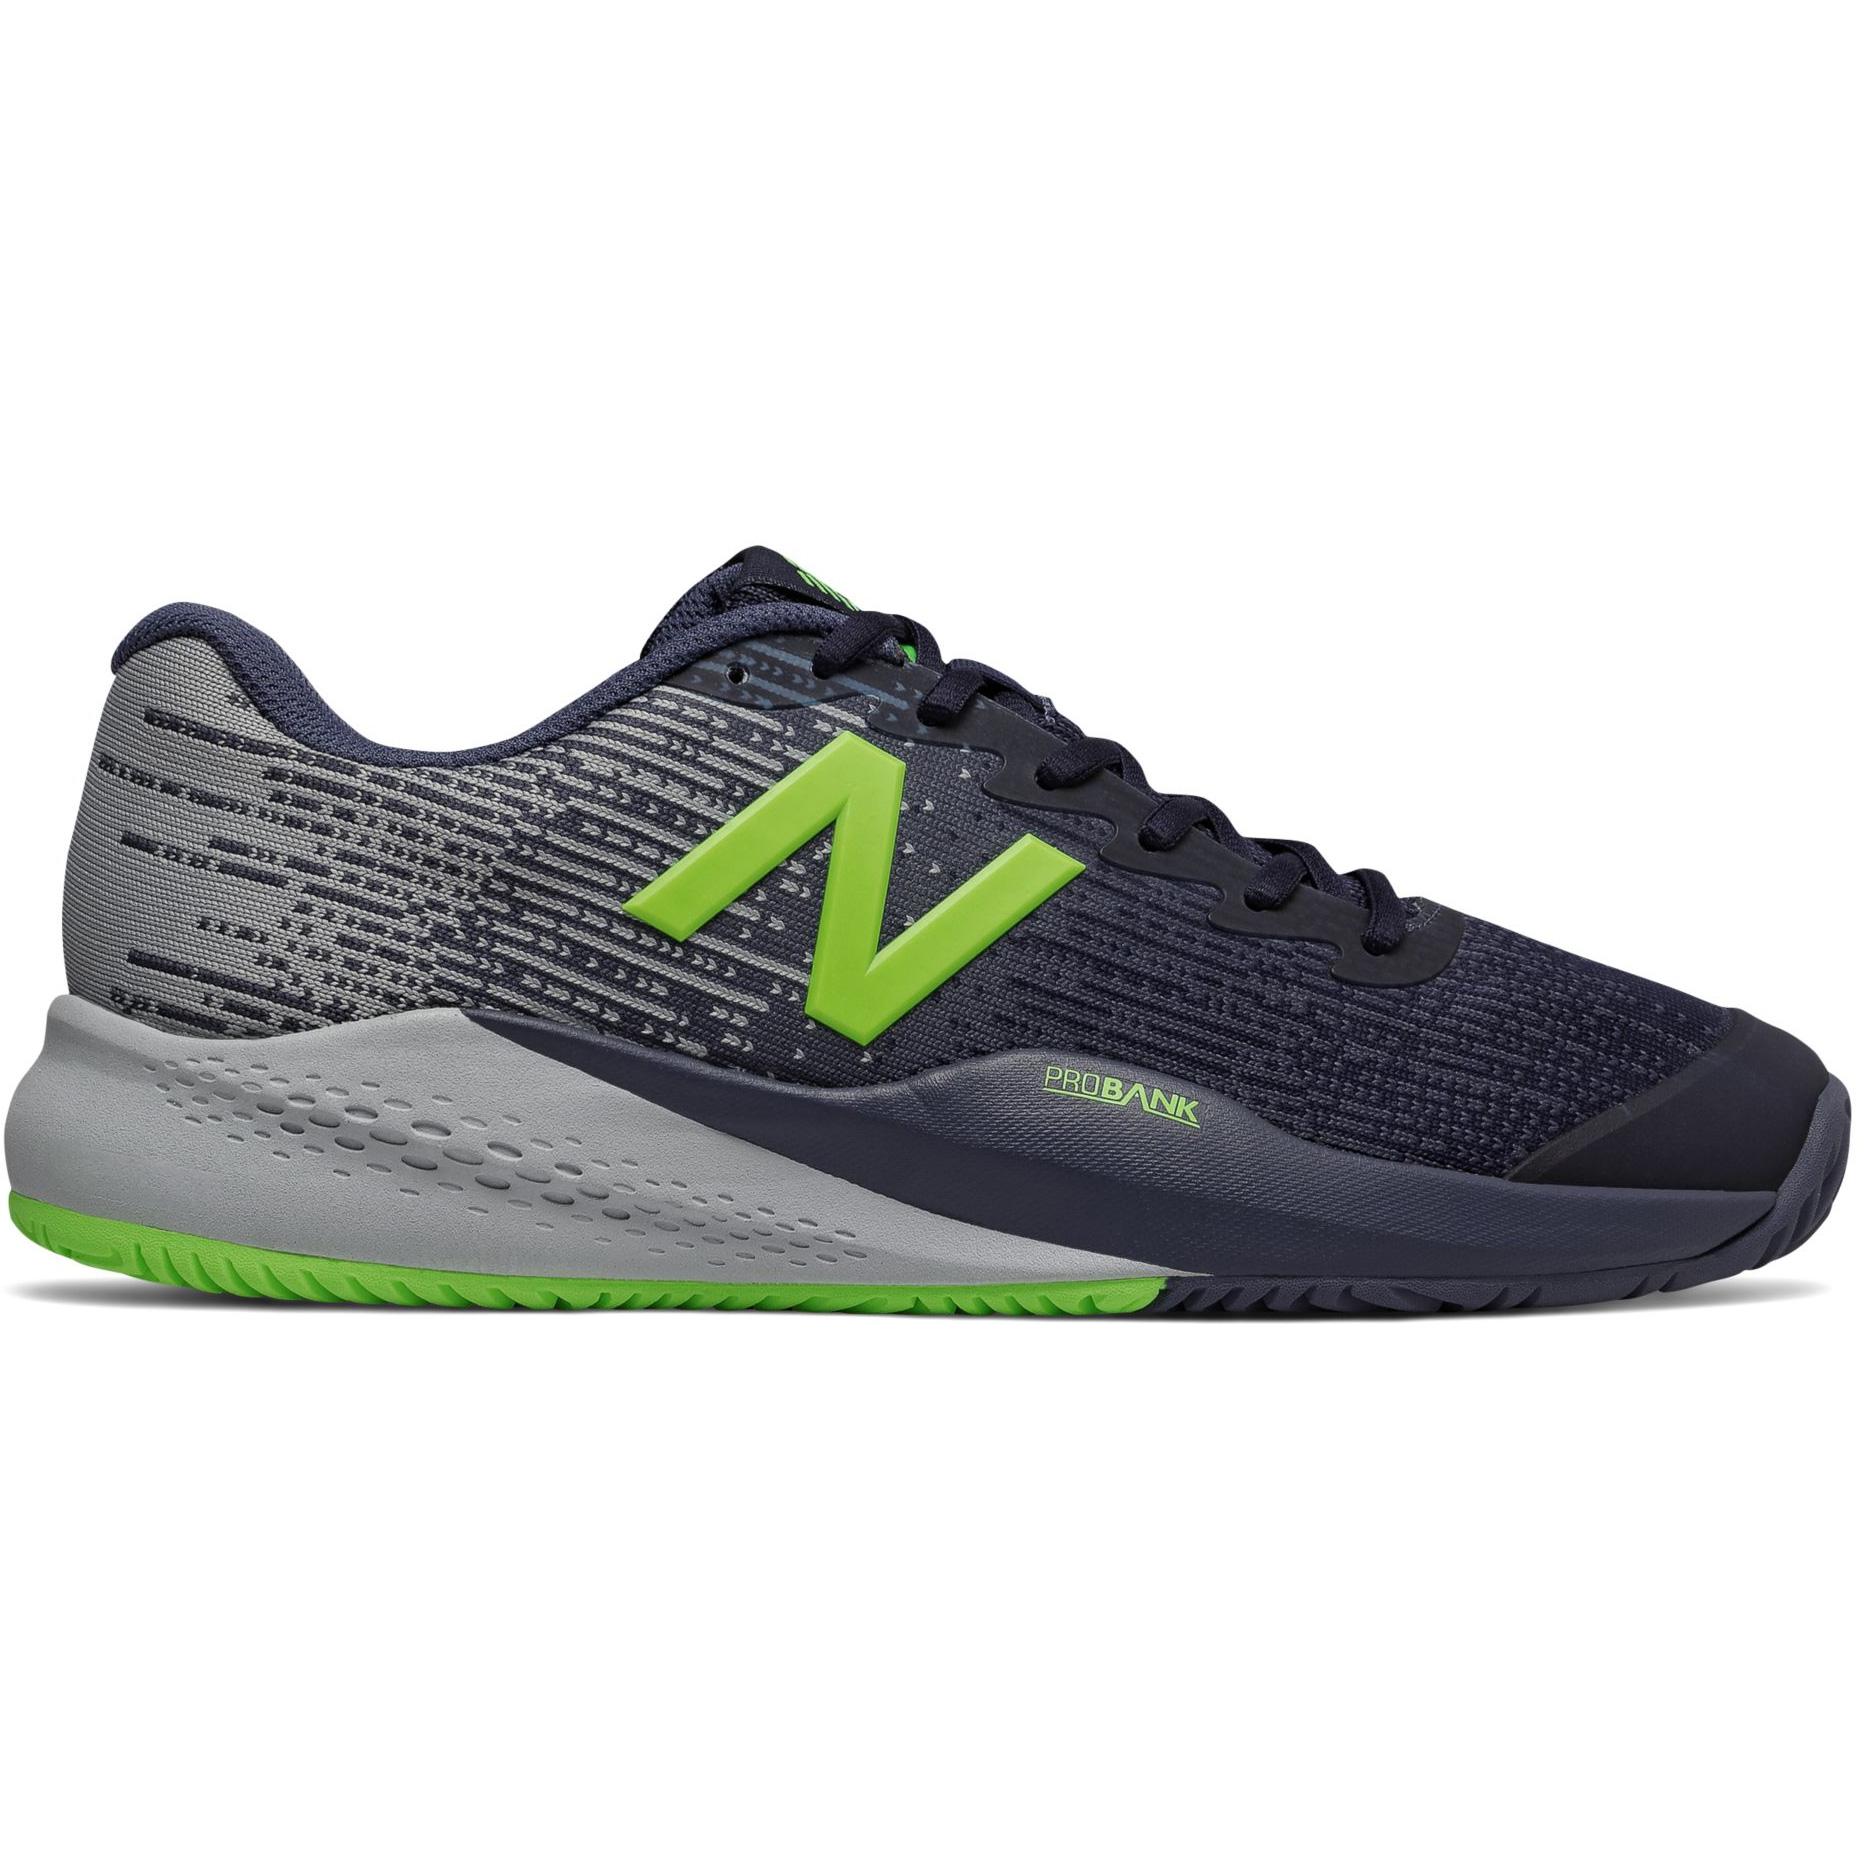 New Balance Mens 996v3 Tennis Shoes - Pigment/Light ...